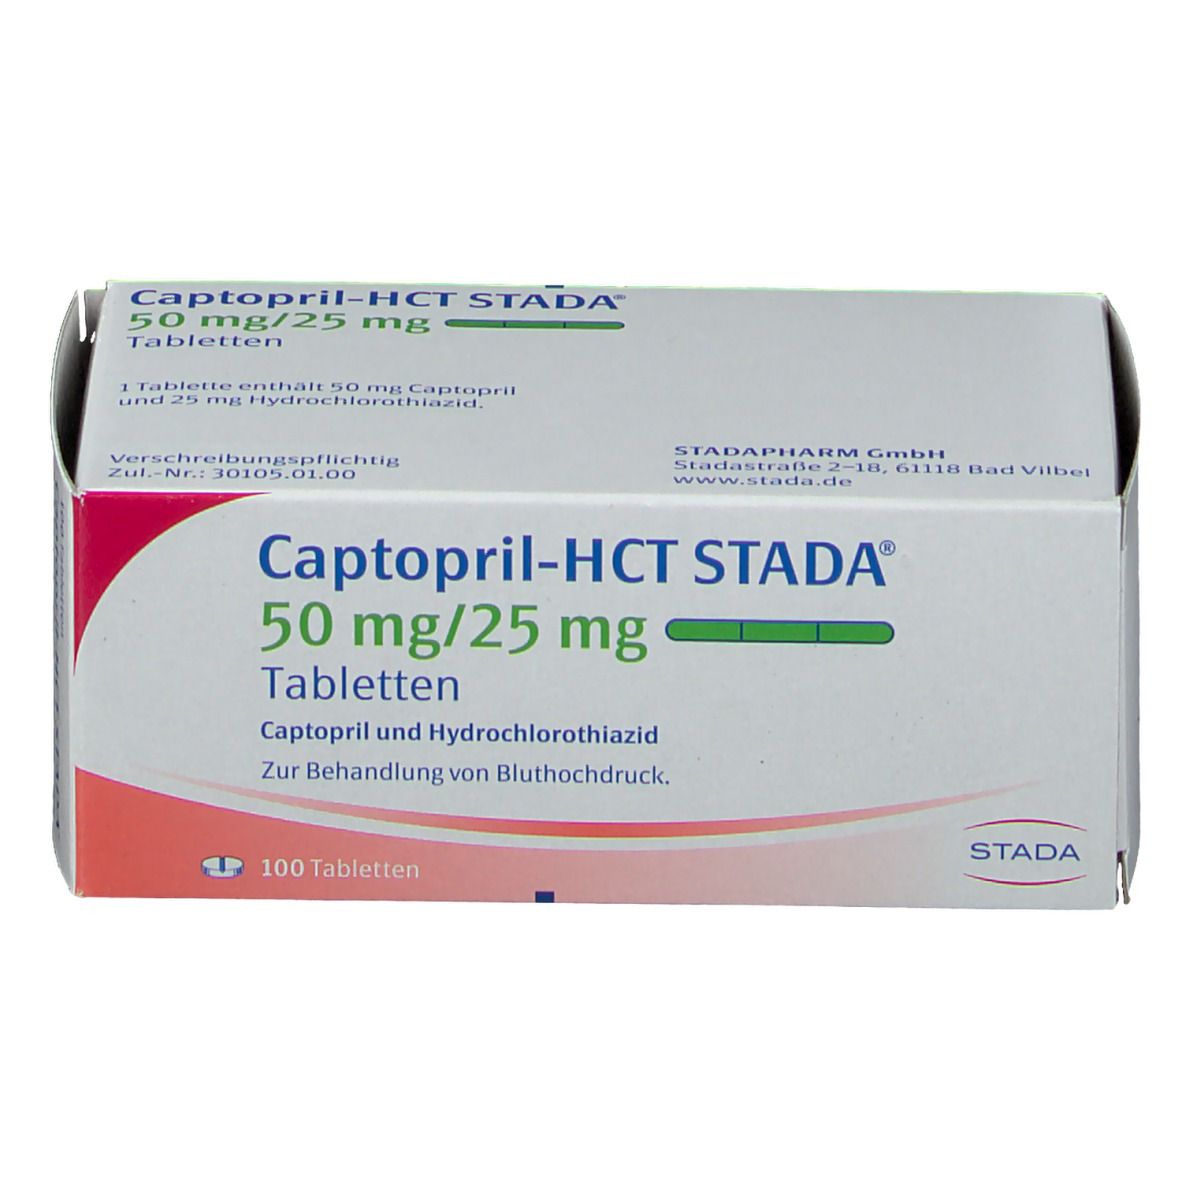 Captopril-HCT STADA® 50 mg/25 mg